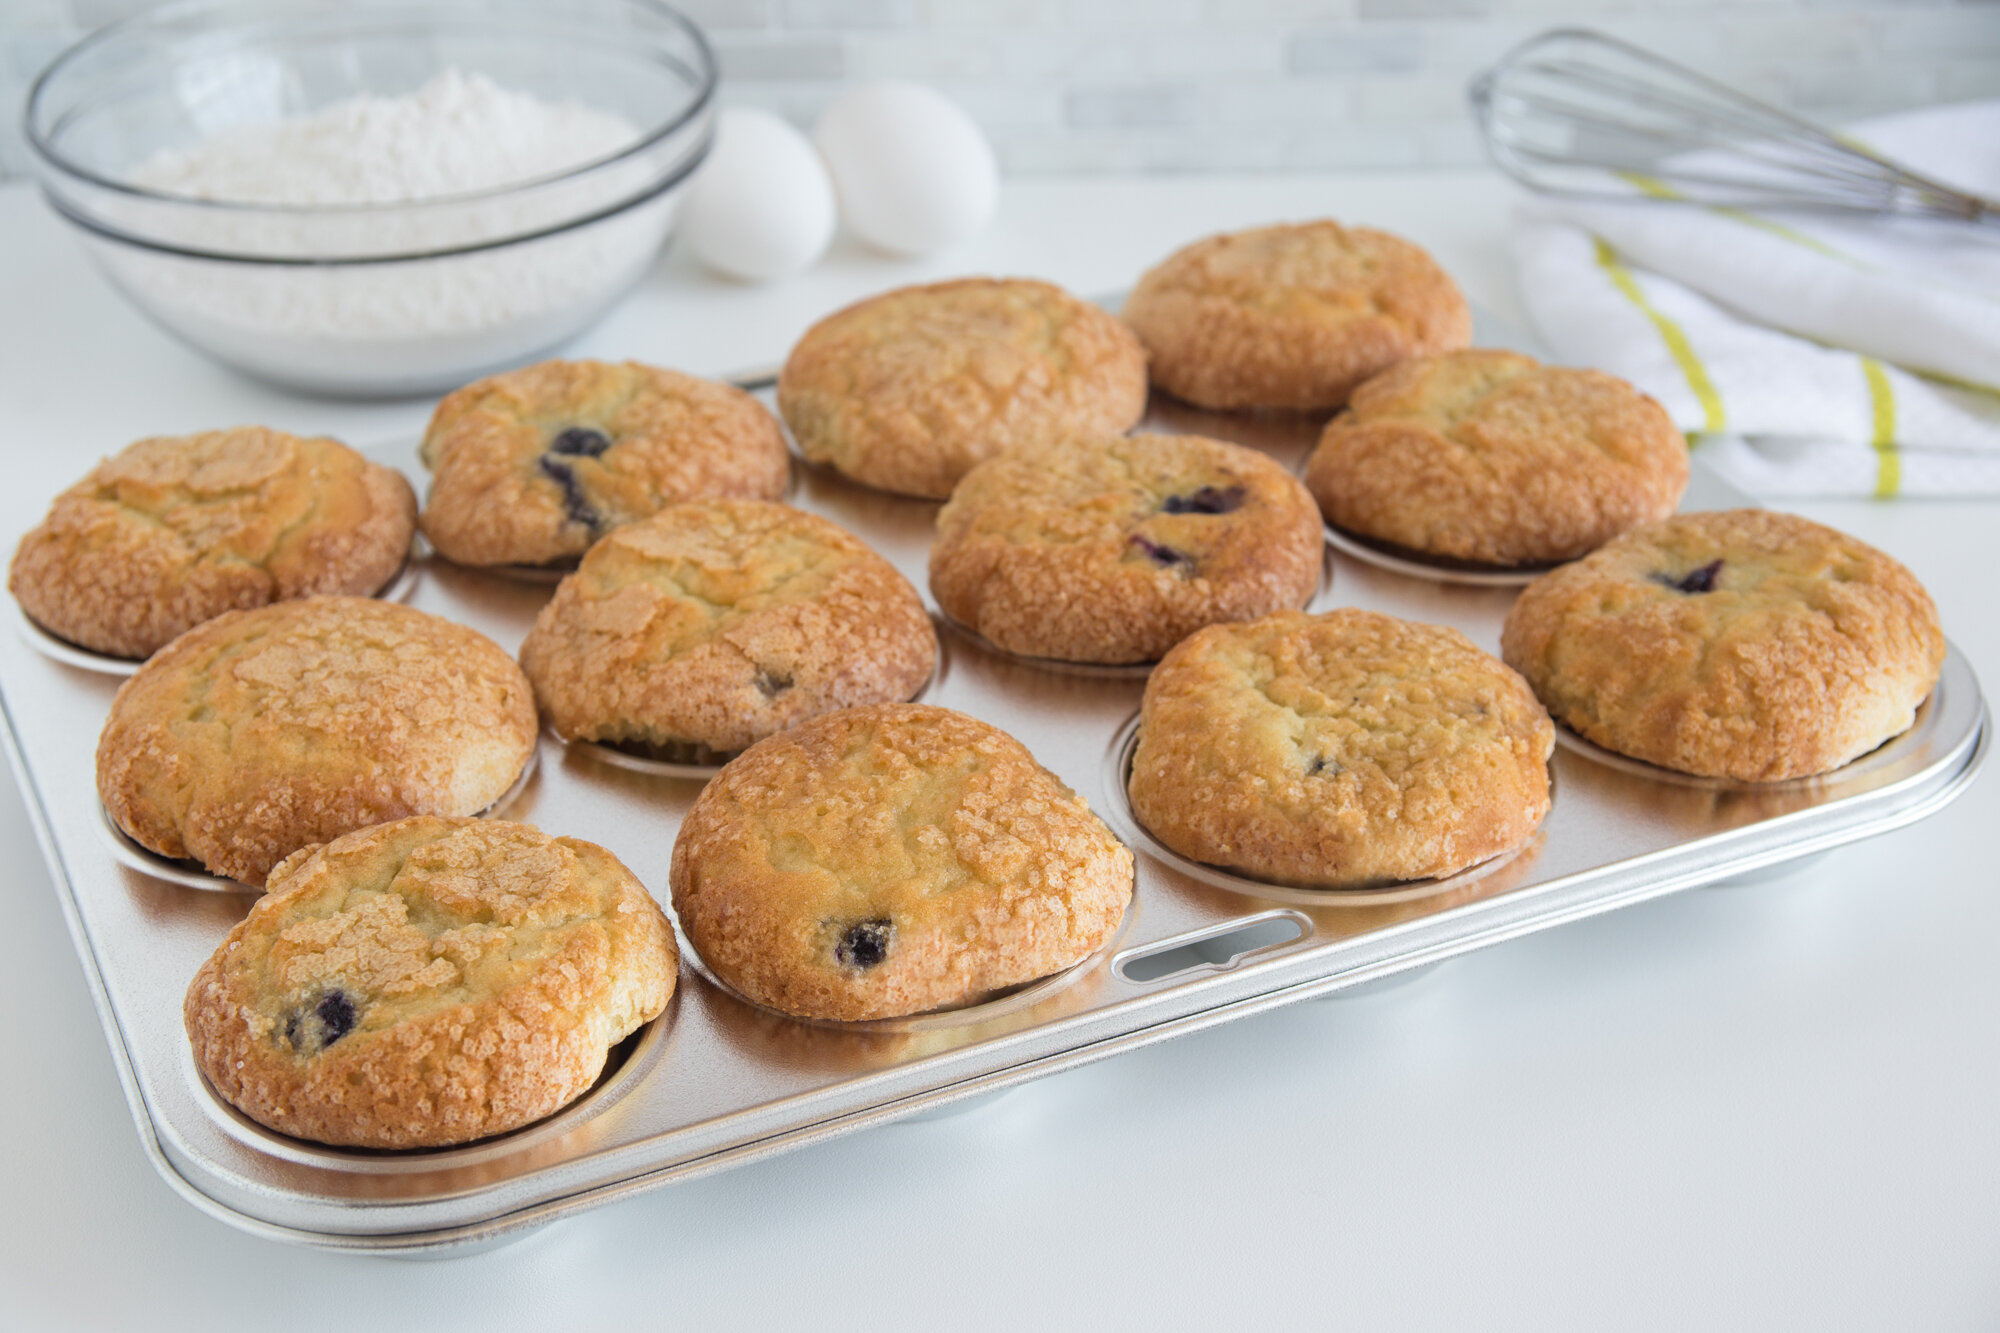 Trudeau Silicone Muffin Pans, Red, Set of 2 - 12 ct Muffin & 24 ct Mini Muffin